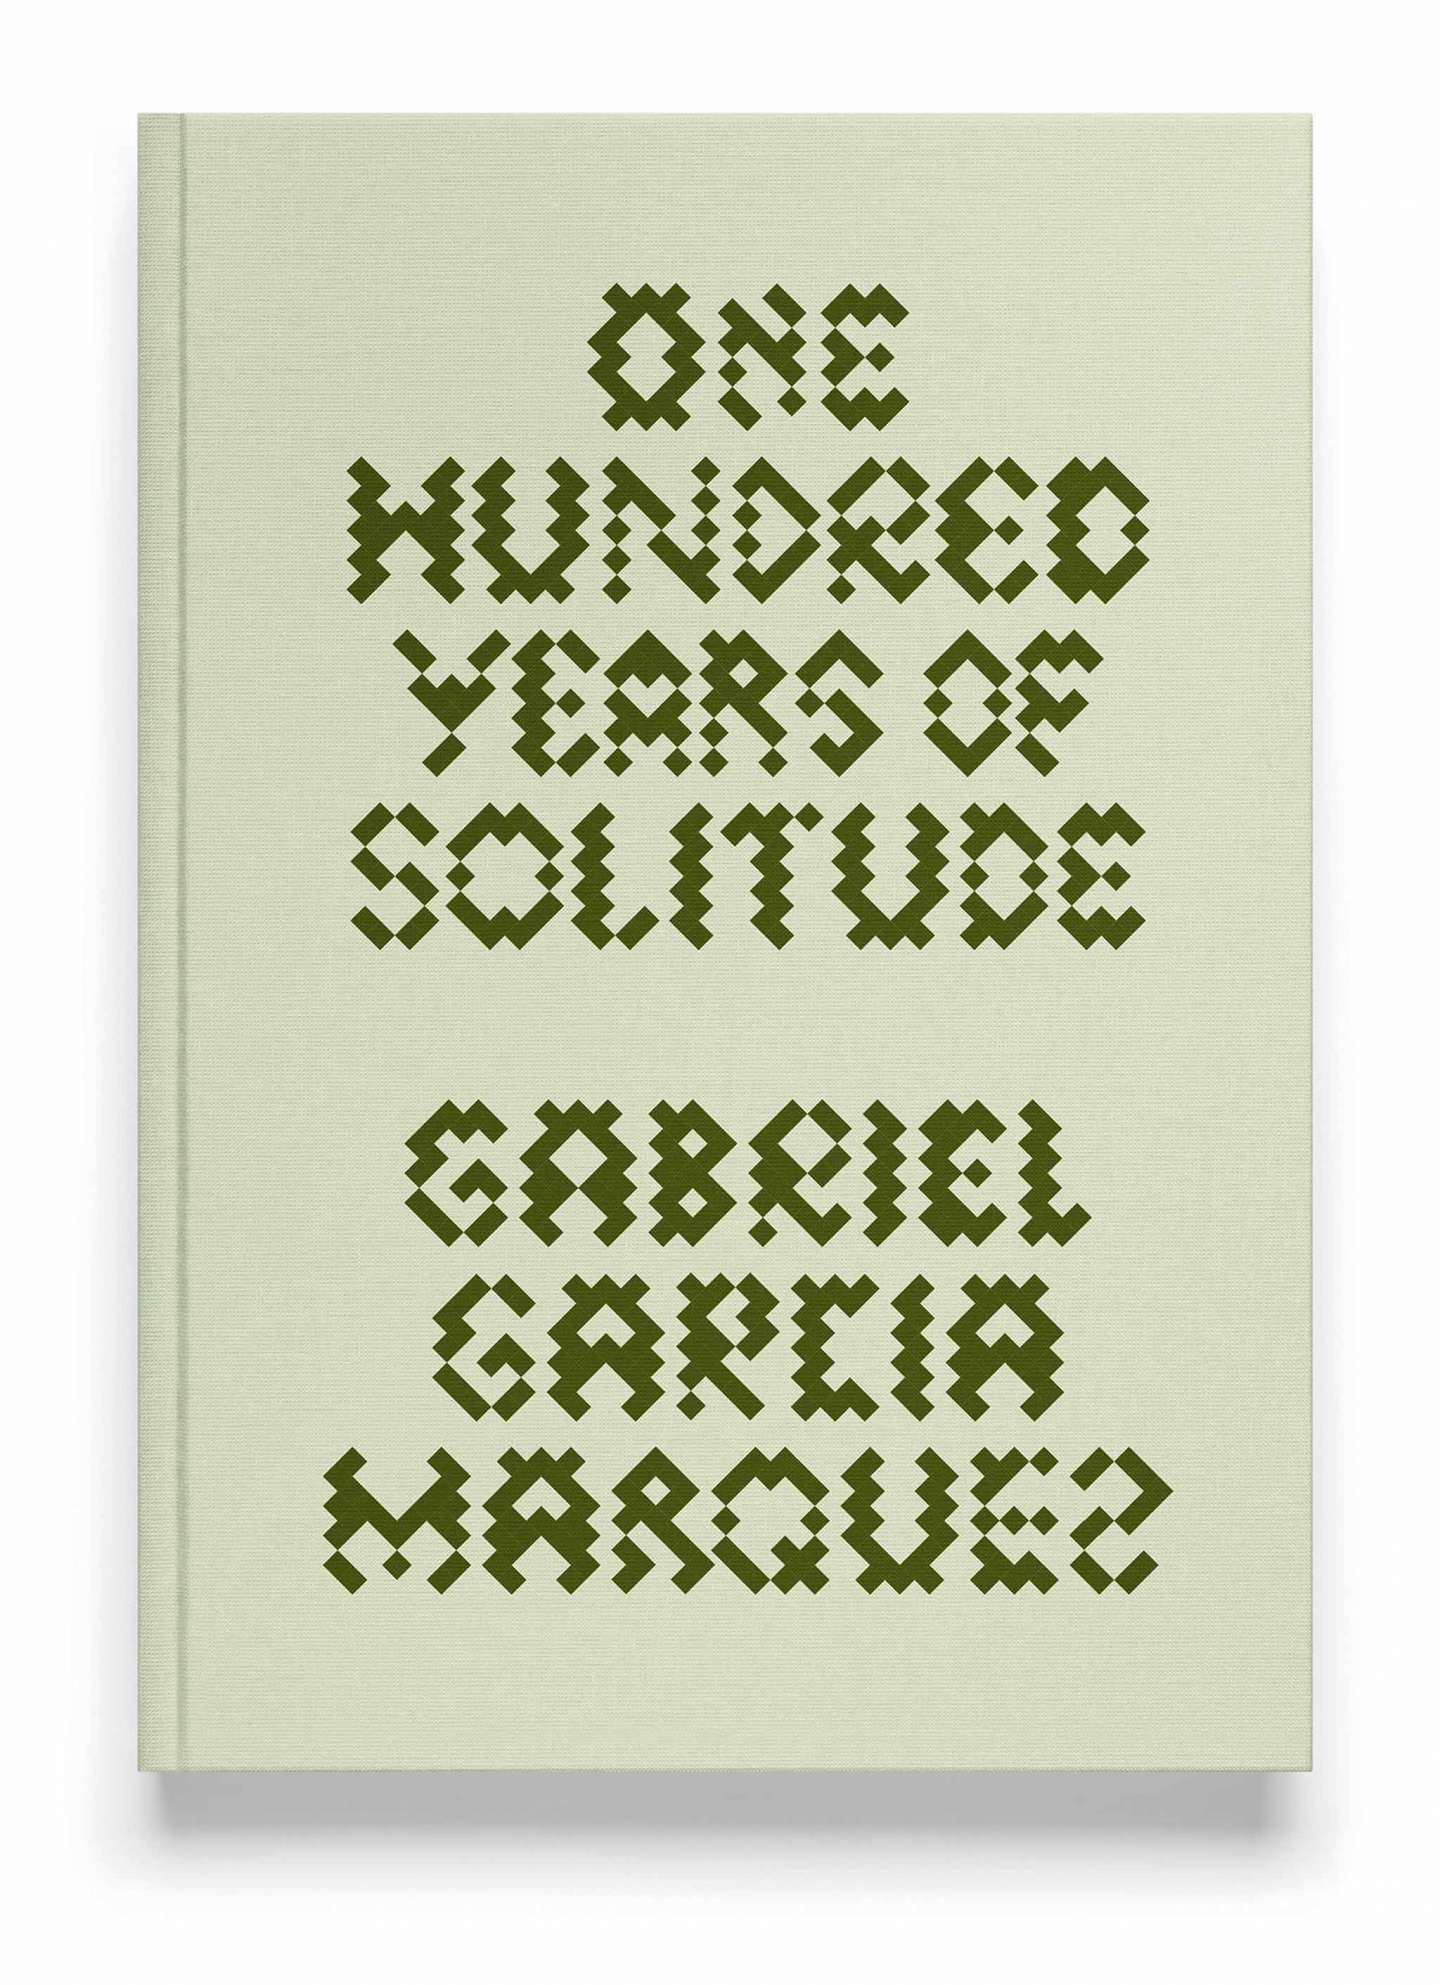 BOOK COVERS: GABRIEL GARCIA MARQUEZ